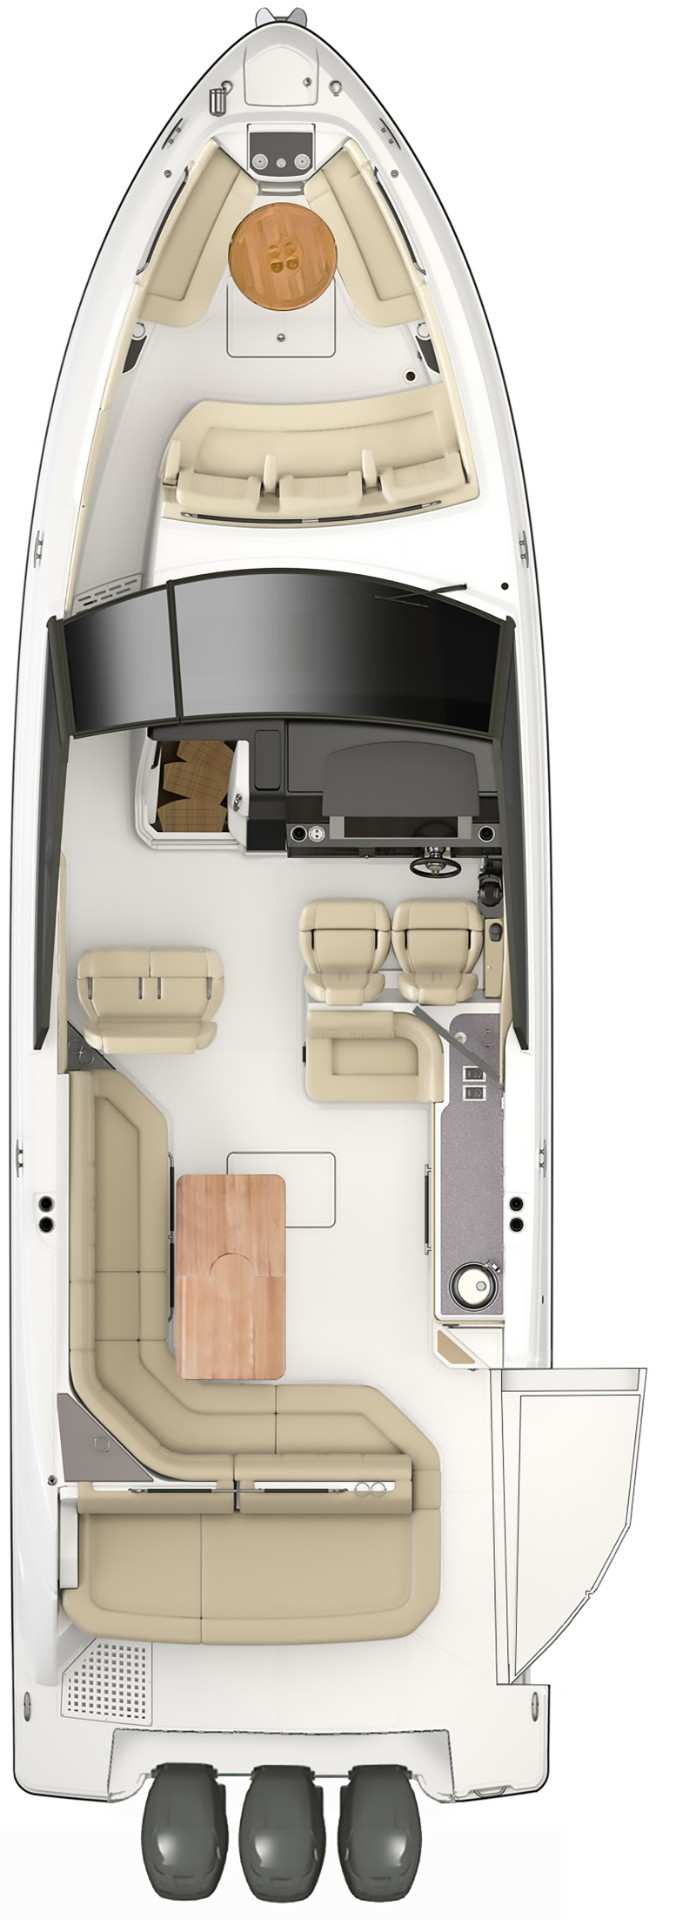 SLX 400 Outboard Cockpit floor plan